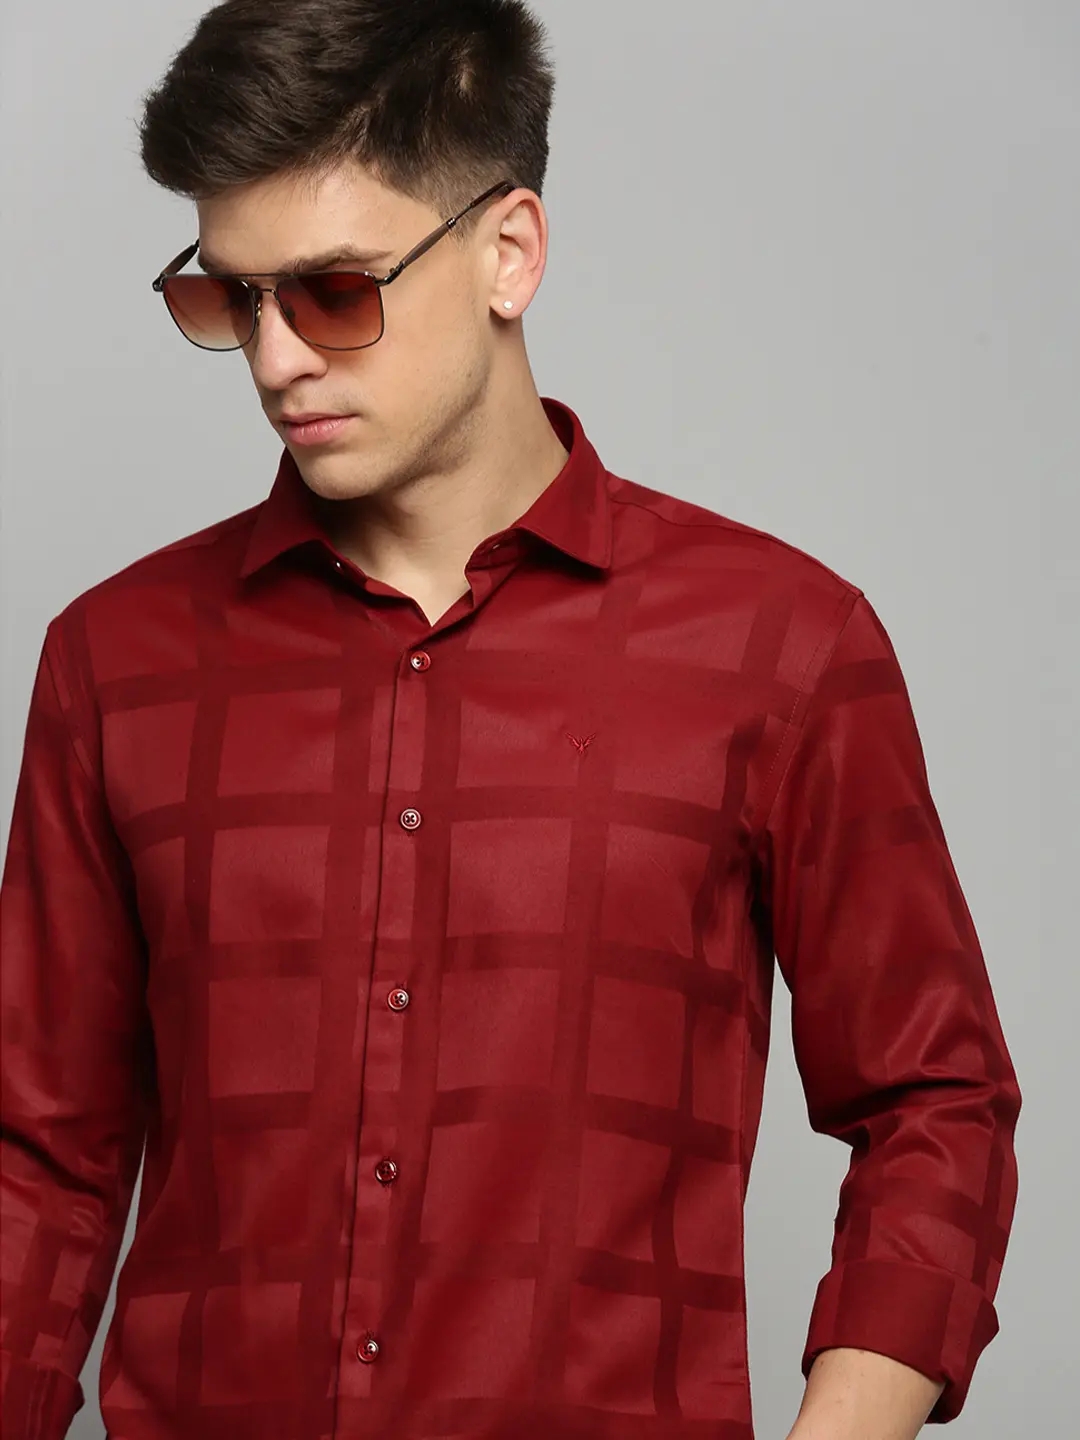 Showoff | SHOWOFF Men's Spread Collar Solid Maroon Classic Shirt